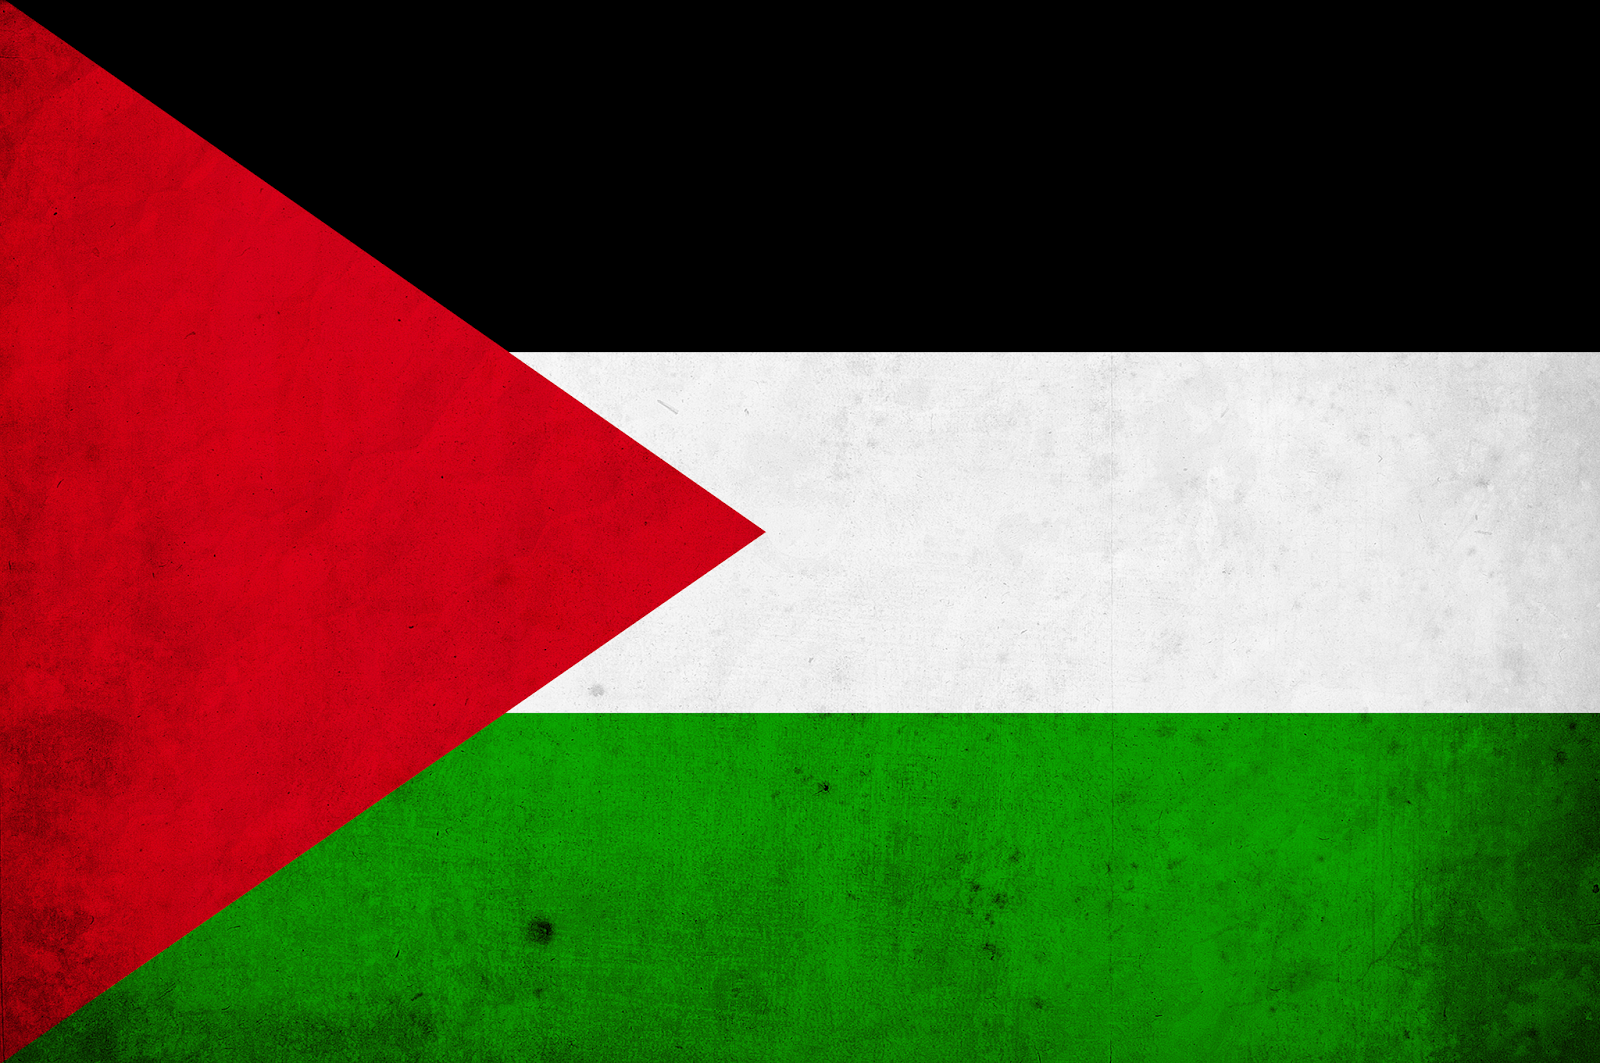 Palestine flag png HD picture 3000x4515 px. Png Vectors, Photo